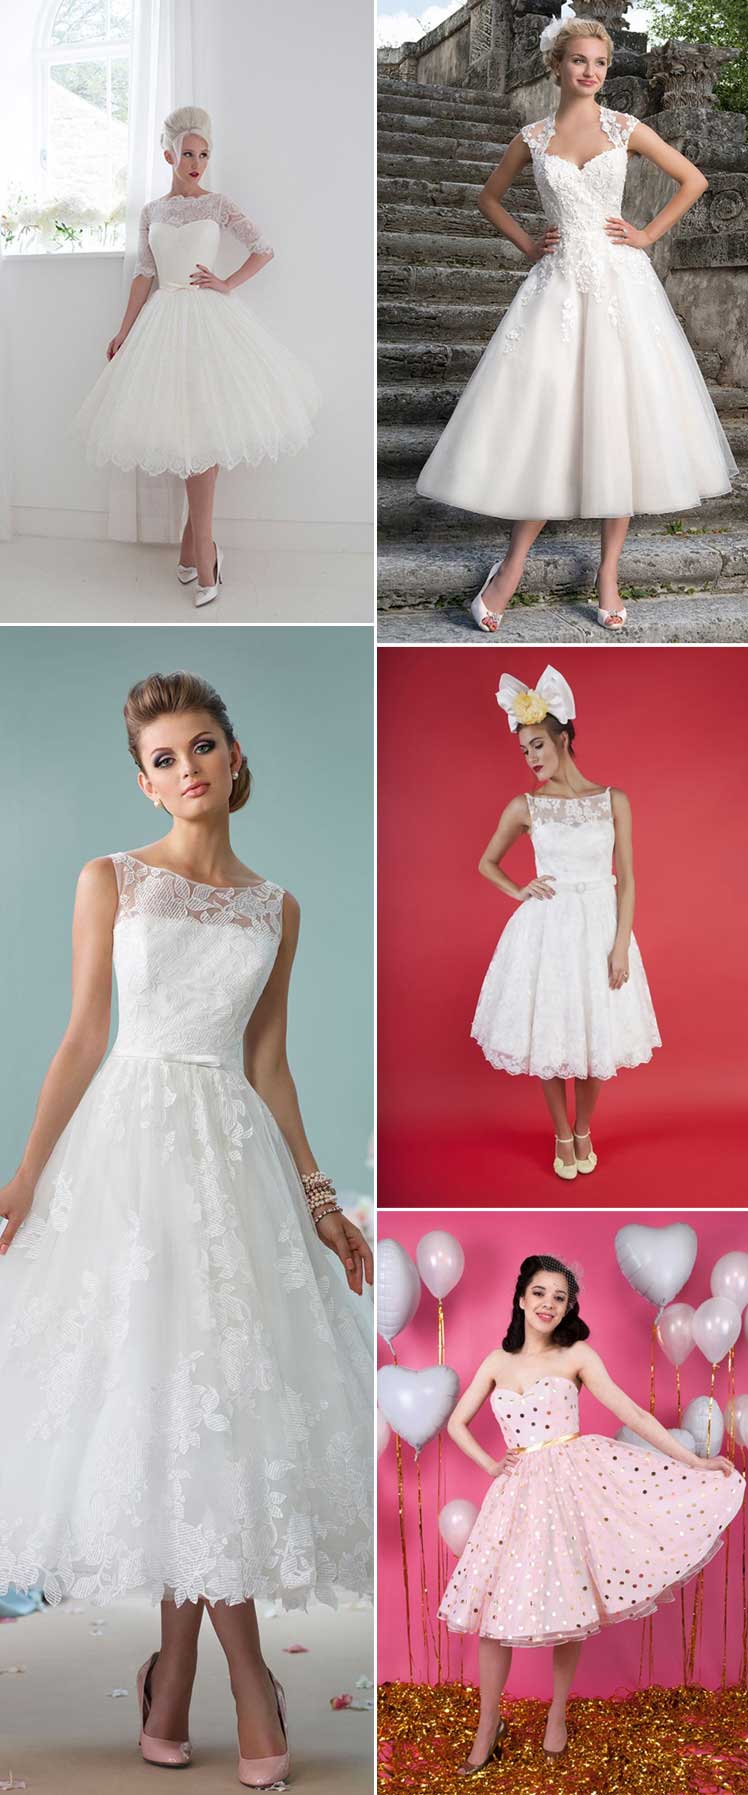 Short wedding dress ideas for chic brides